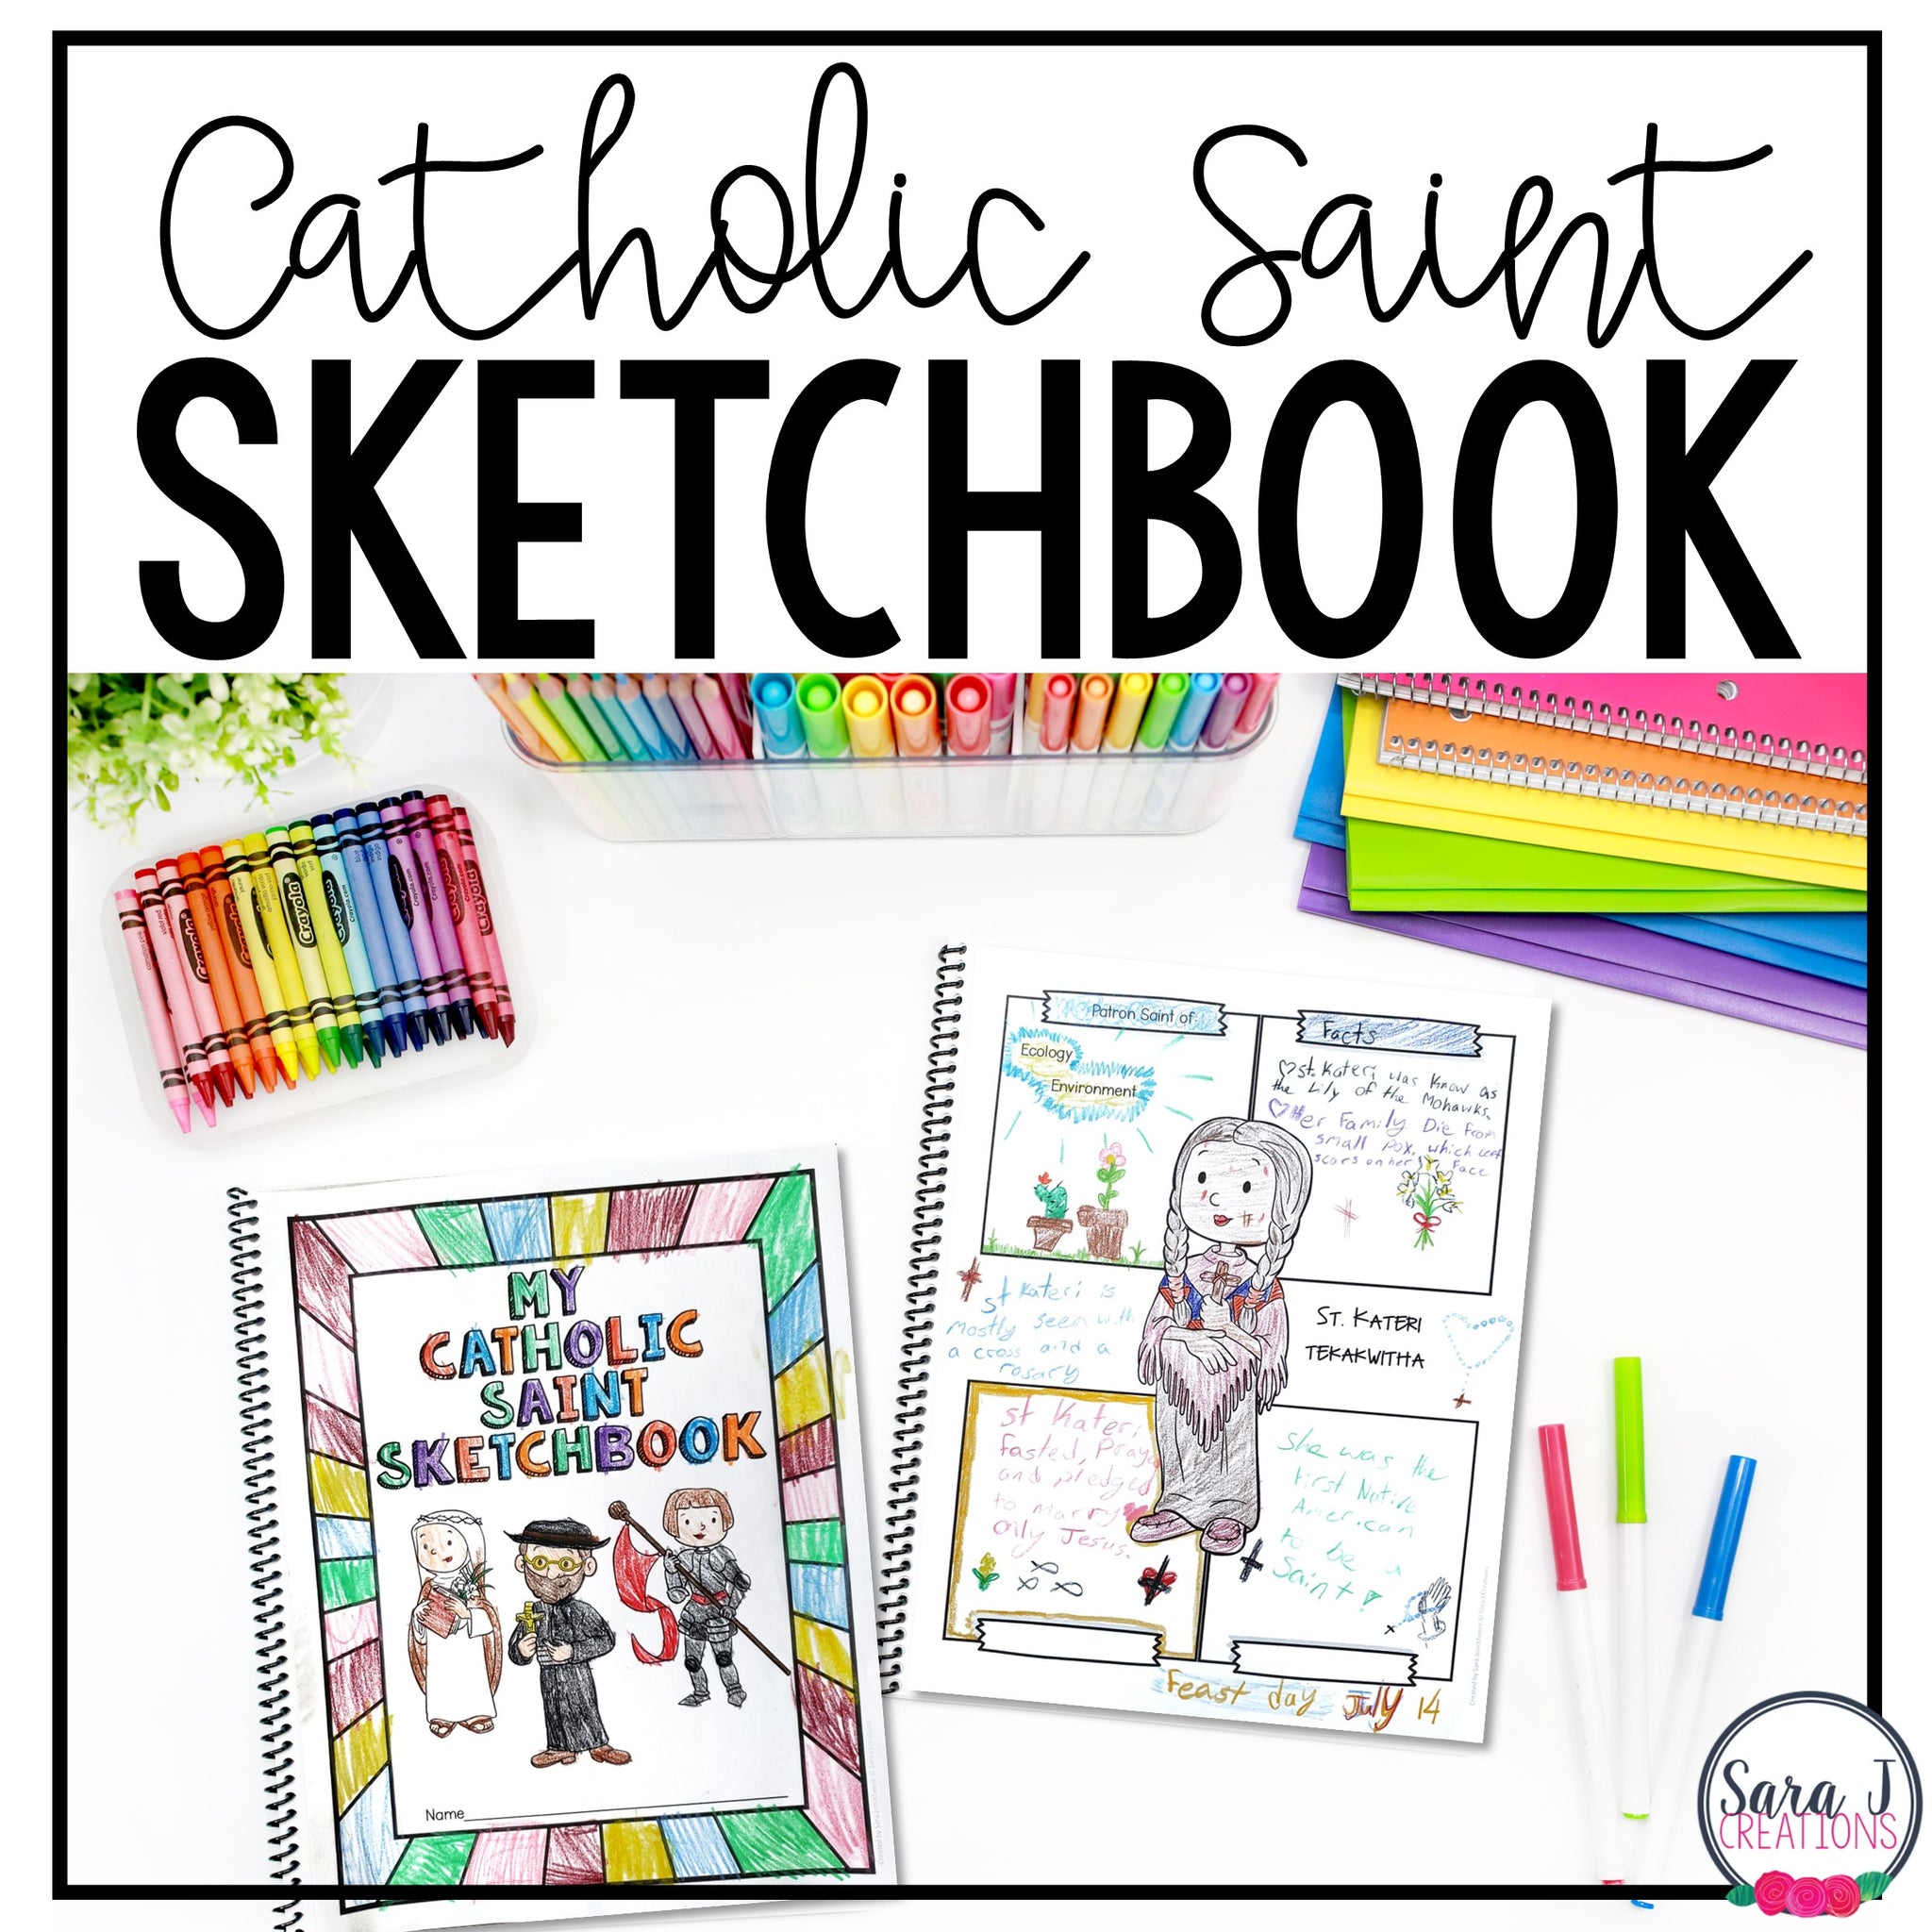 Catholic saints sketchbook coloring book for big kids â sara j creations